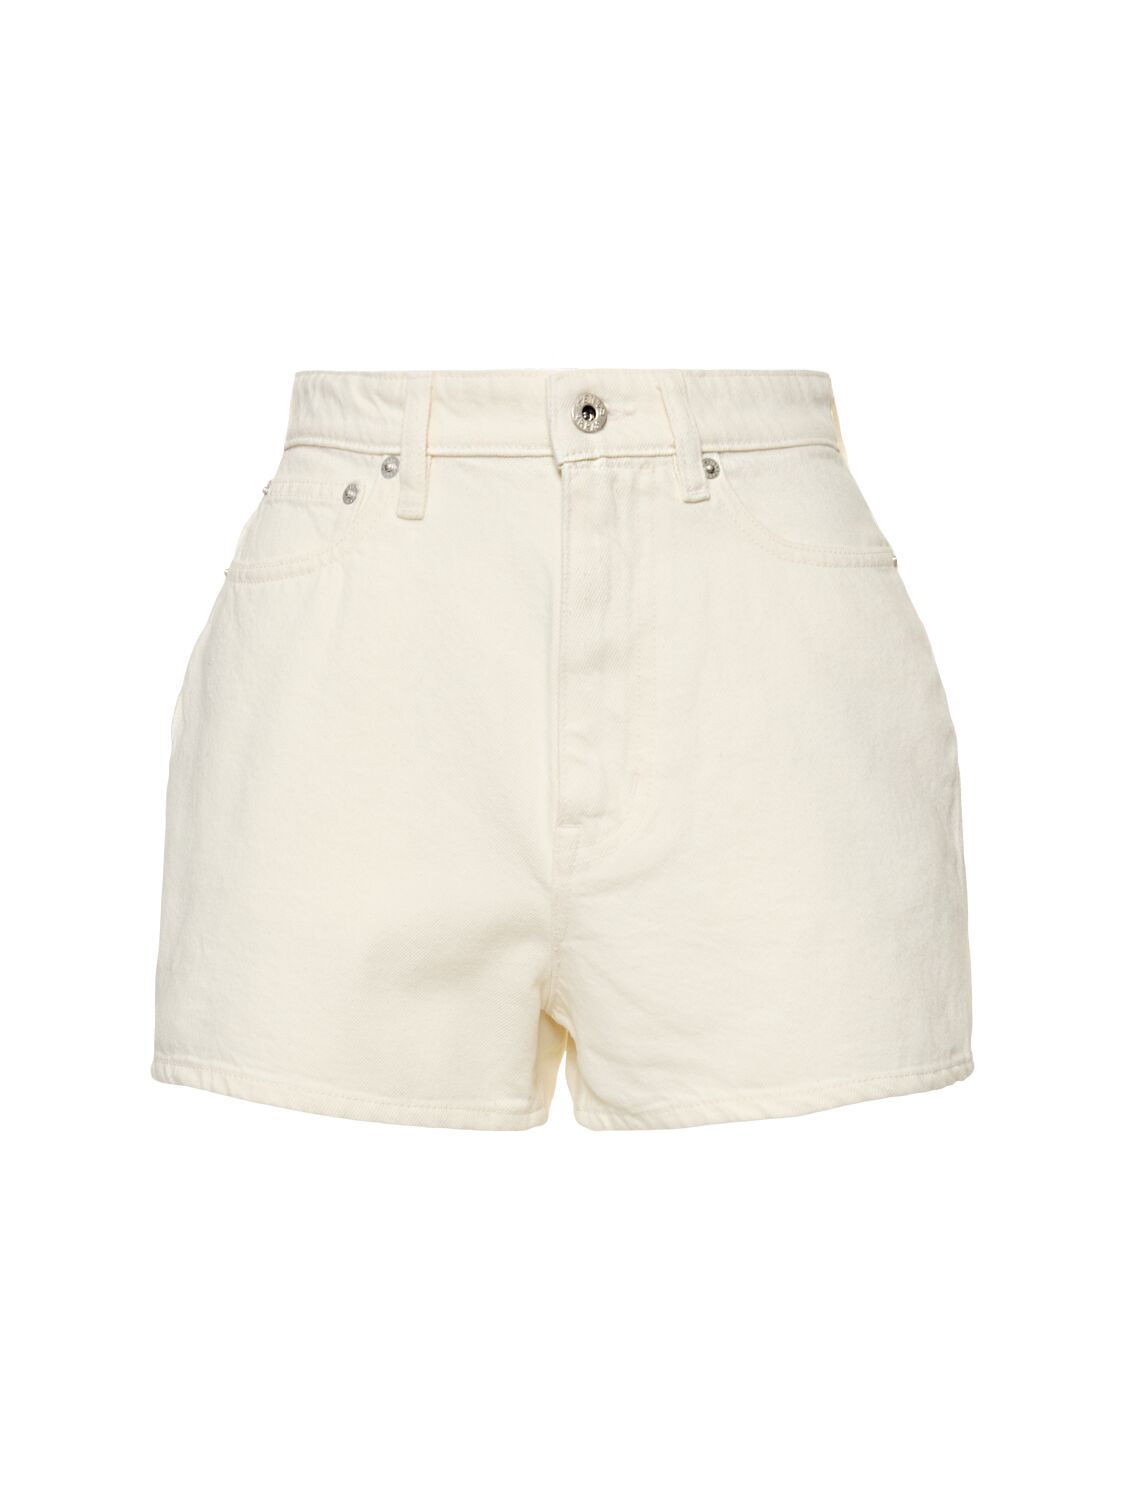 Cotton Denim Shorts